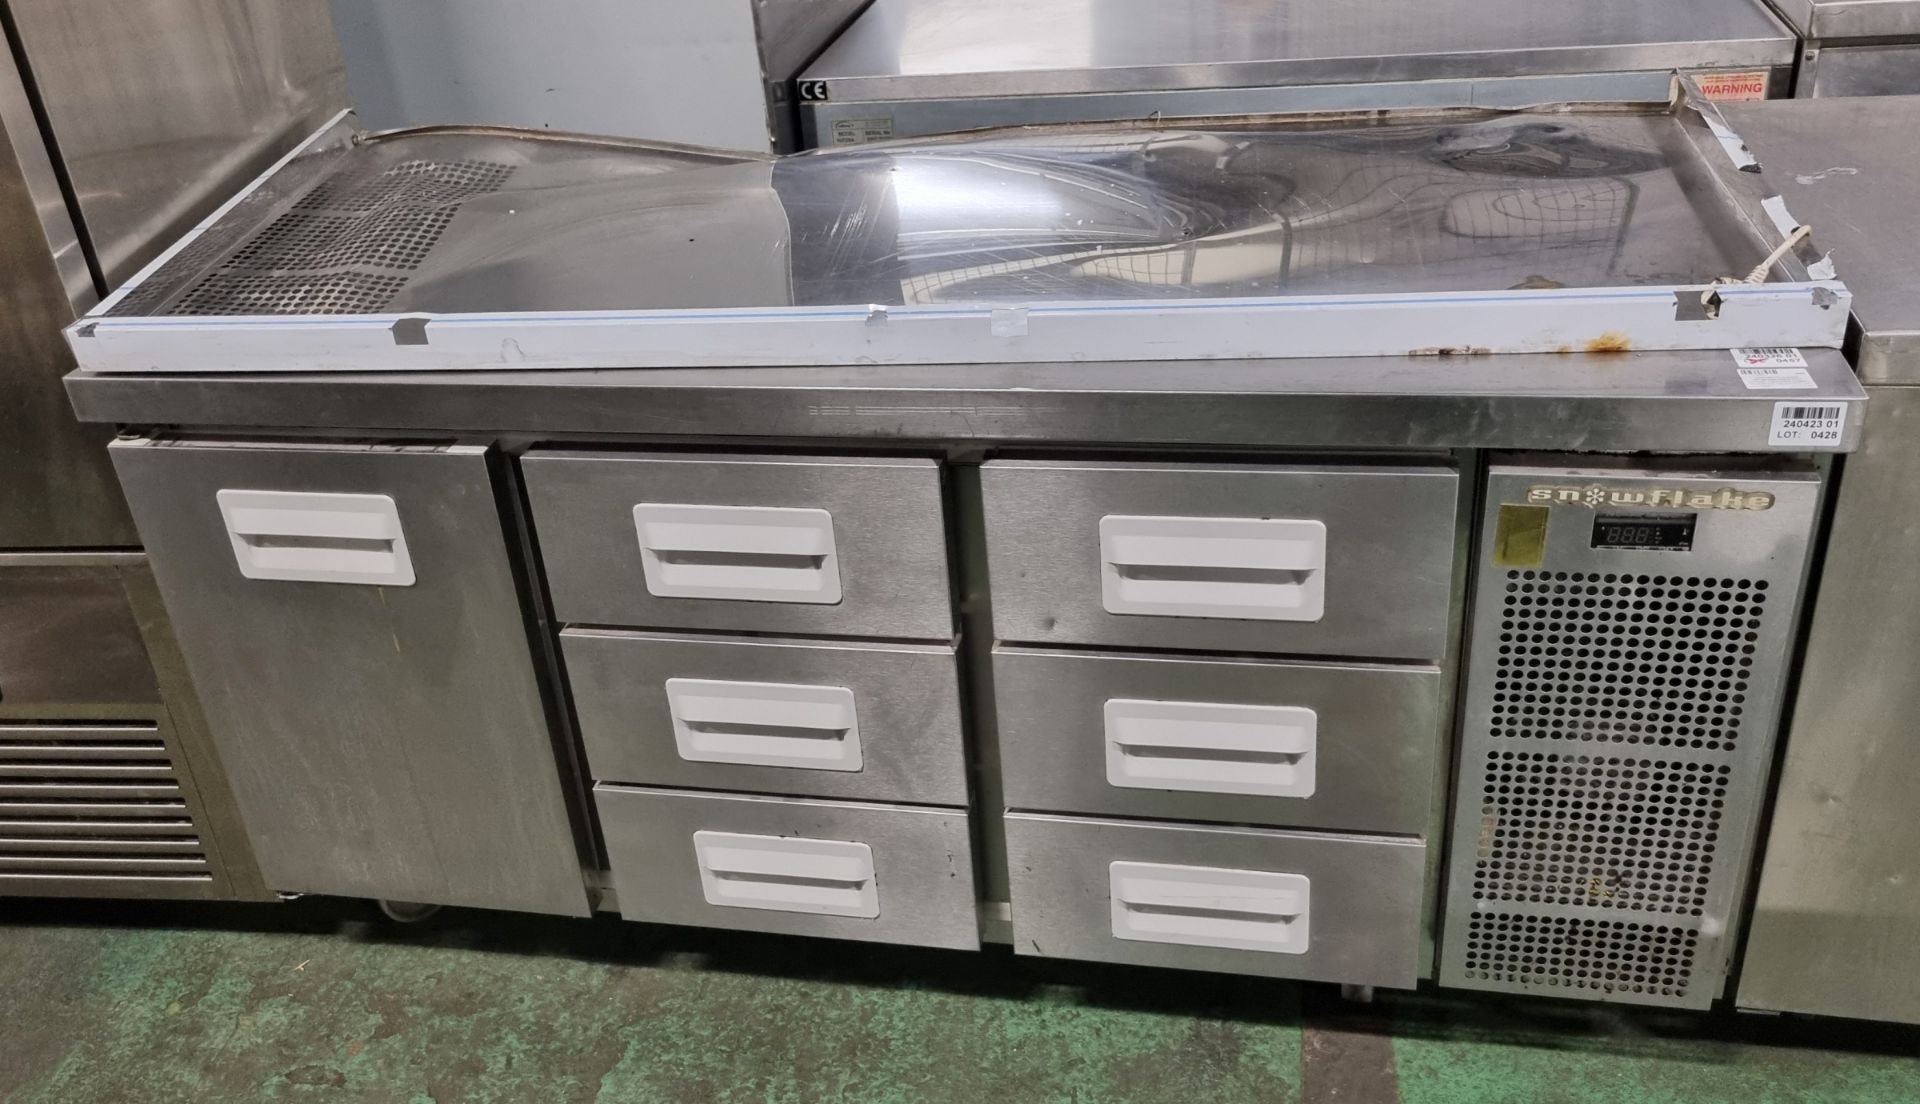 Hoshizaki Snowflake refrigerated preparation counter with storage drawers - back plate broken